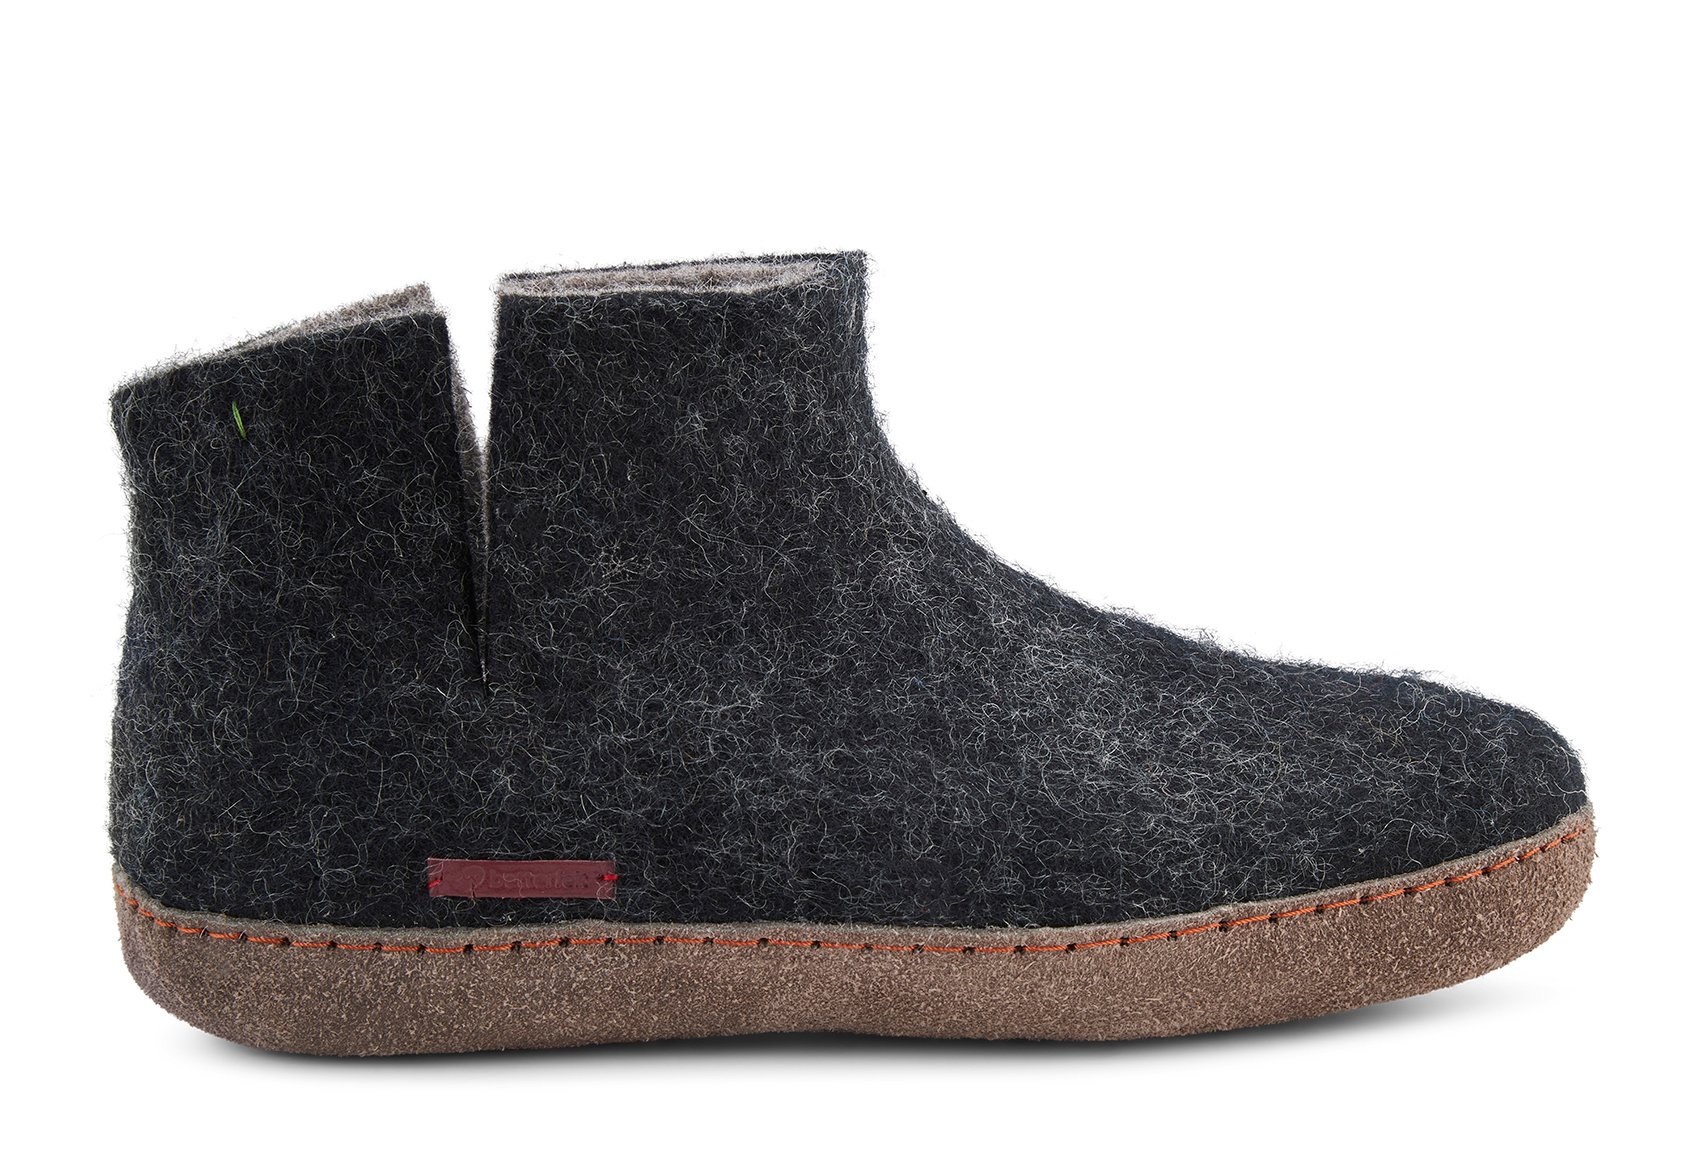 woolen boot design